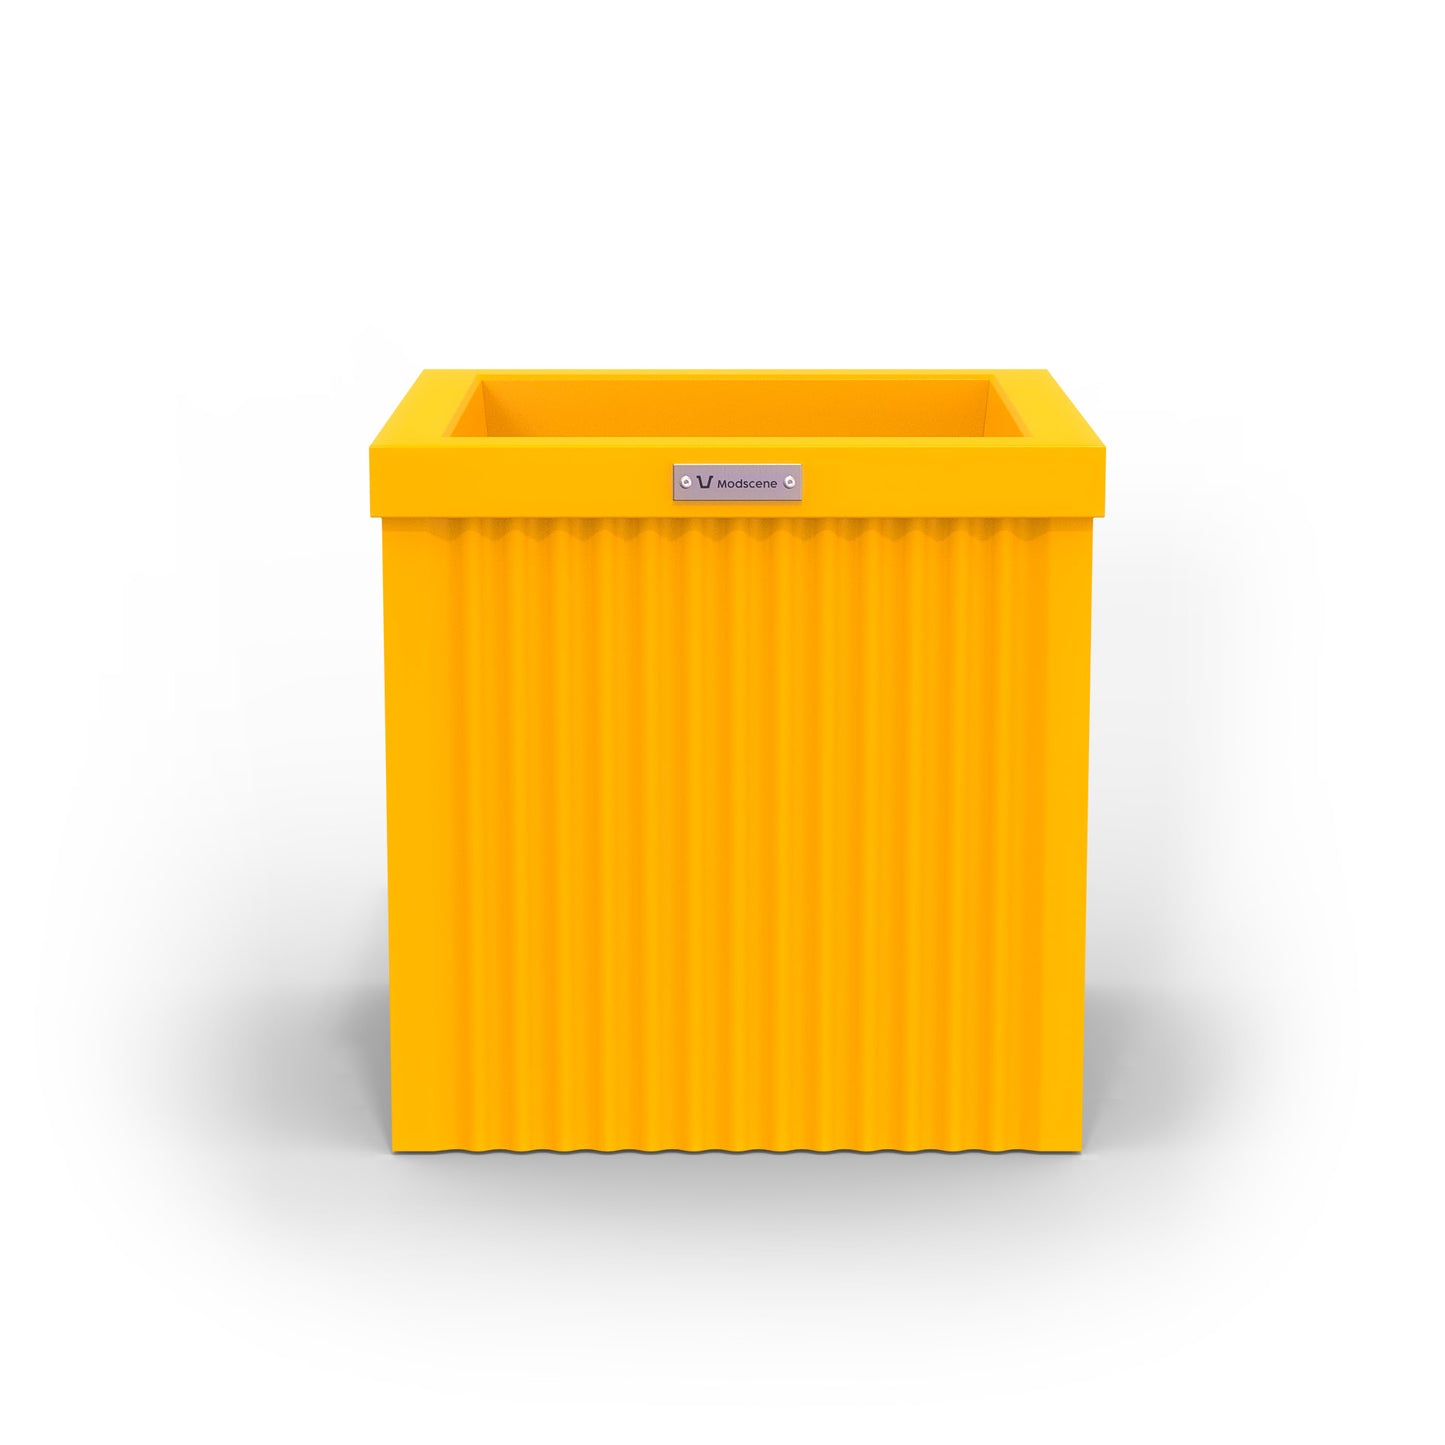 A corrugated square planter pot. The pot planter is yellow in colour.